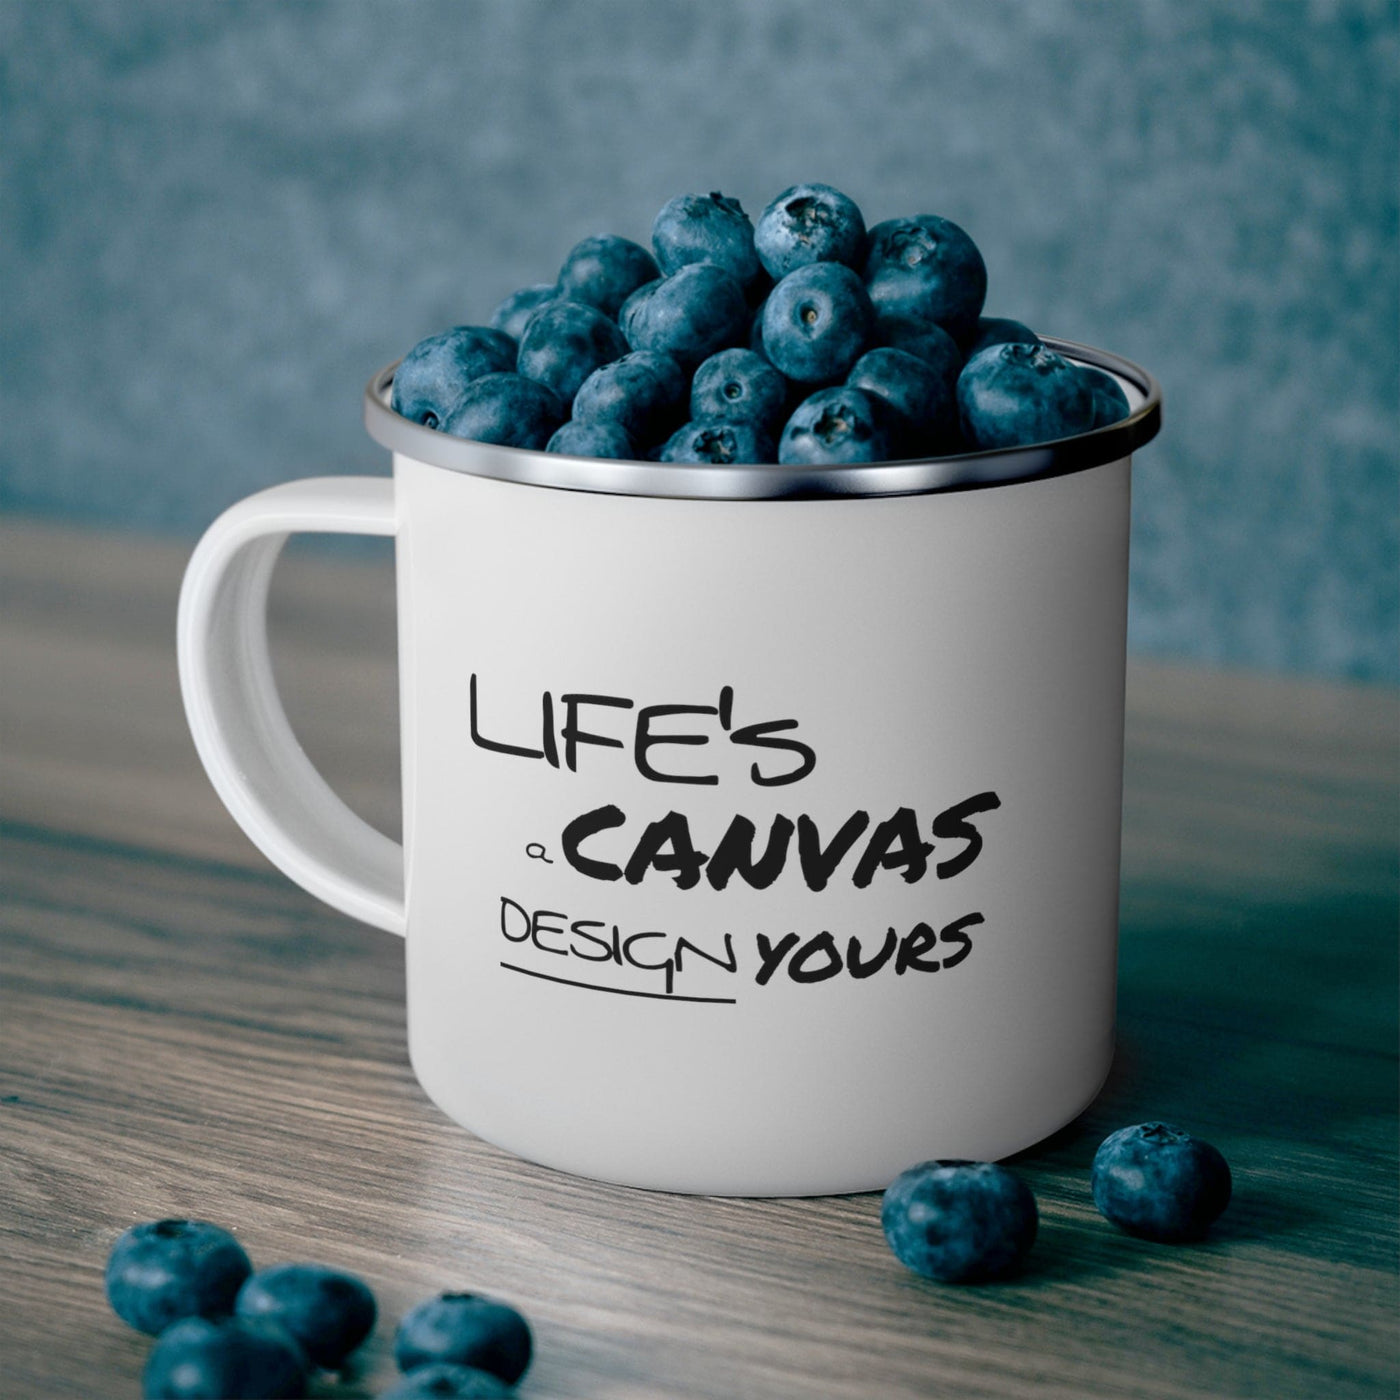 Enamel Camping Mug Life’s a Canvas Design Yours Motivational Aspiration